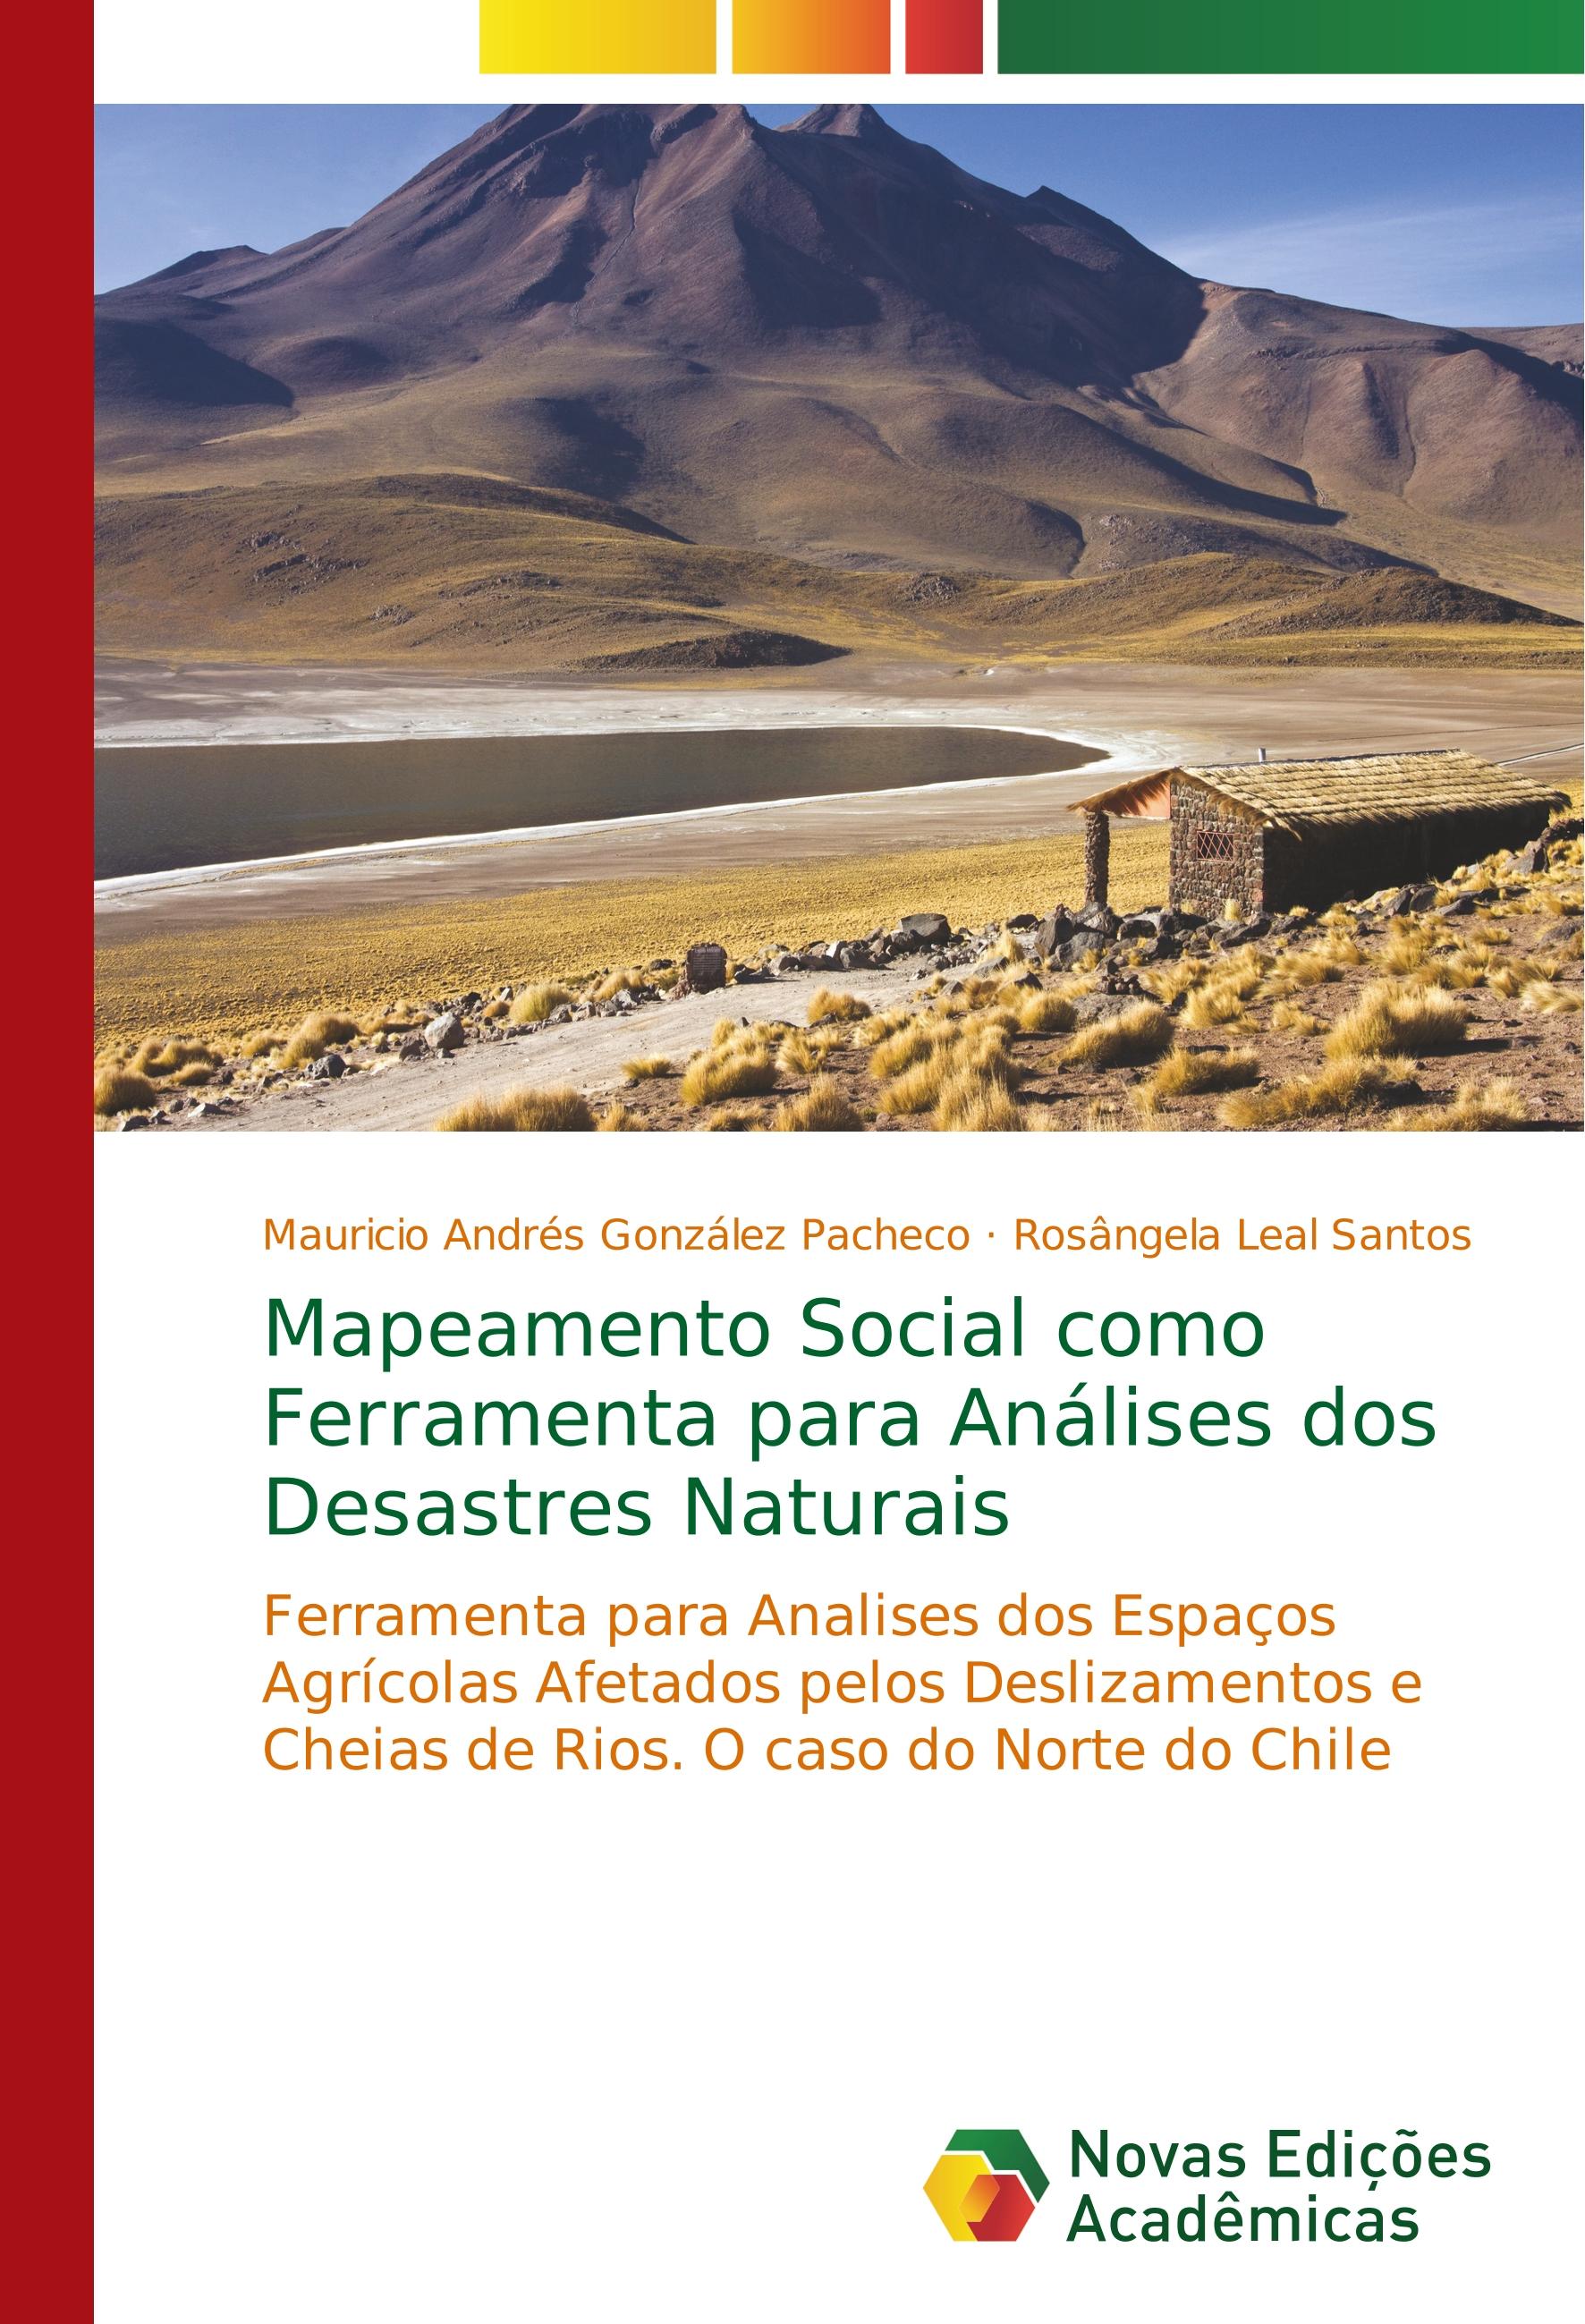 Mapeamento Social como Ferramenta para Análises dos Desastres Naturais - Mauricio Andrés González Pacheco Rosângela Leal Santos